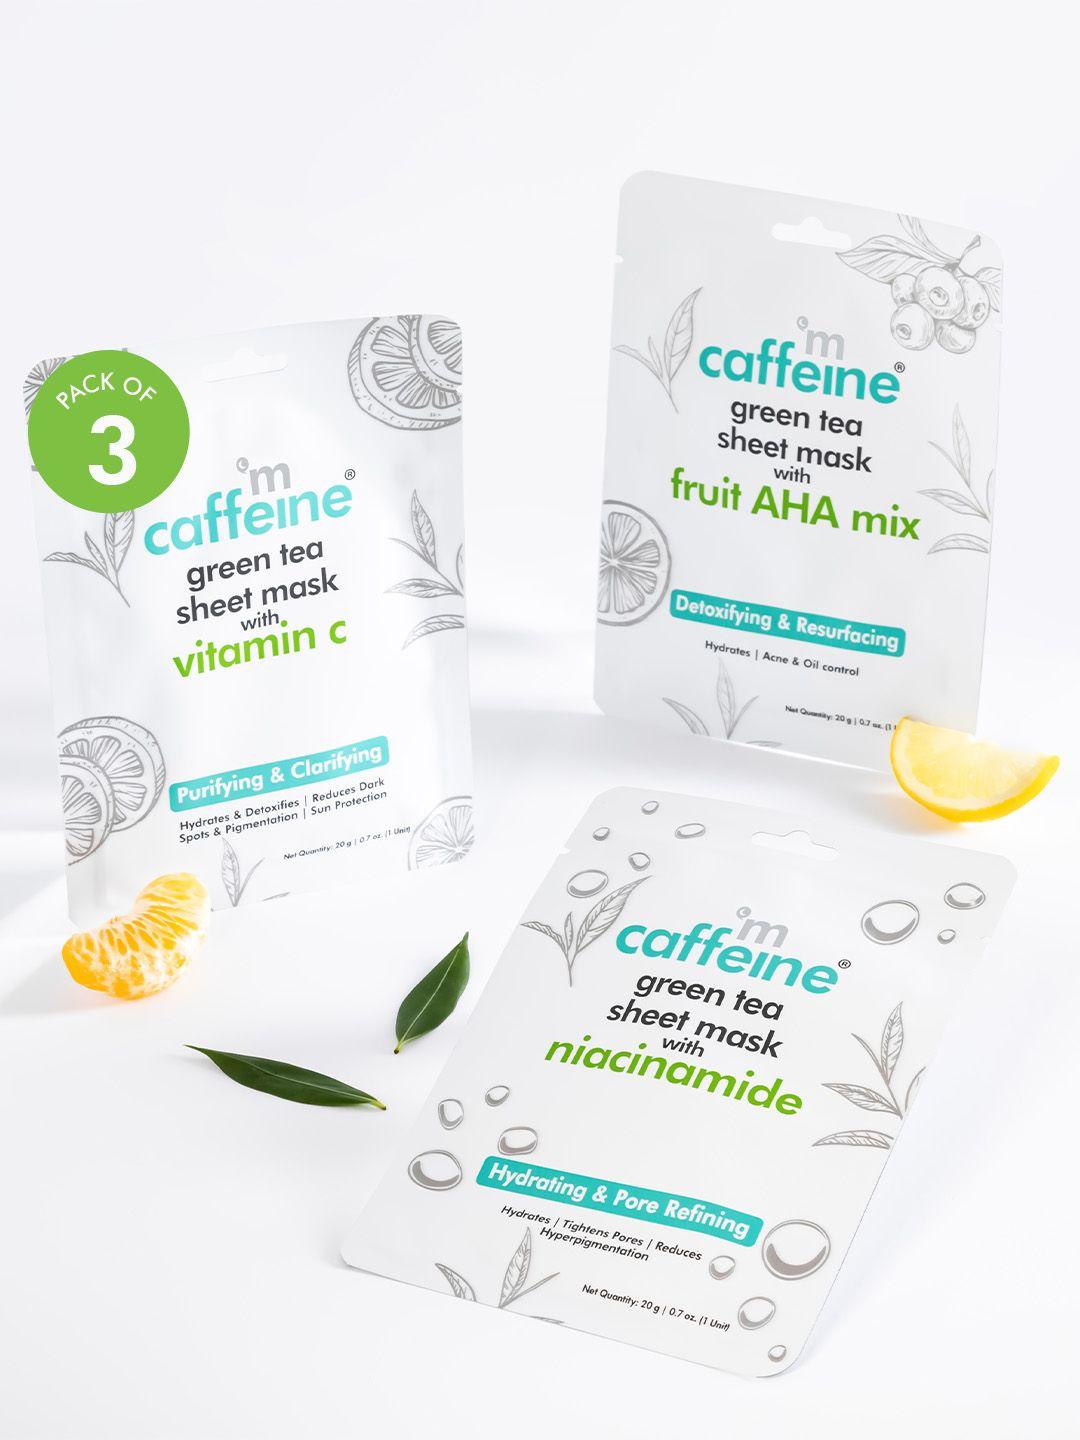 mcaffeine set of 3 green tea sheet masks with vitamin c, niacinamide & fruit aha-20g each